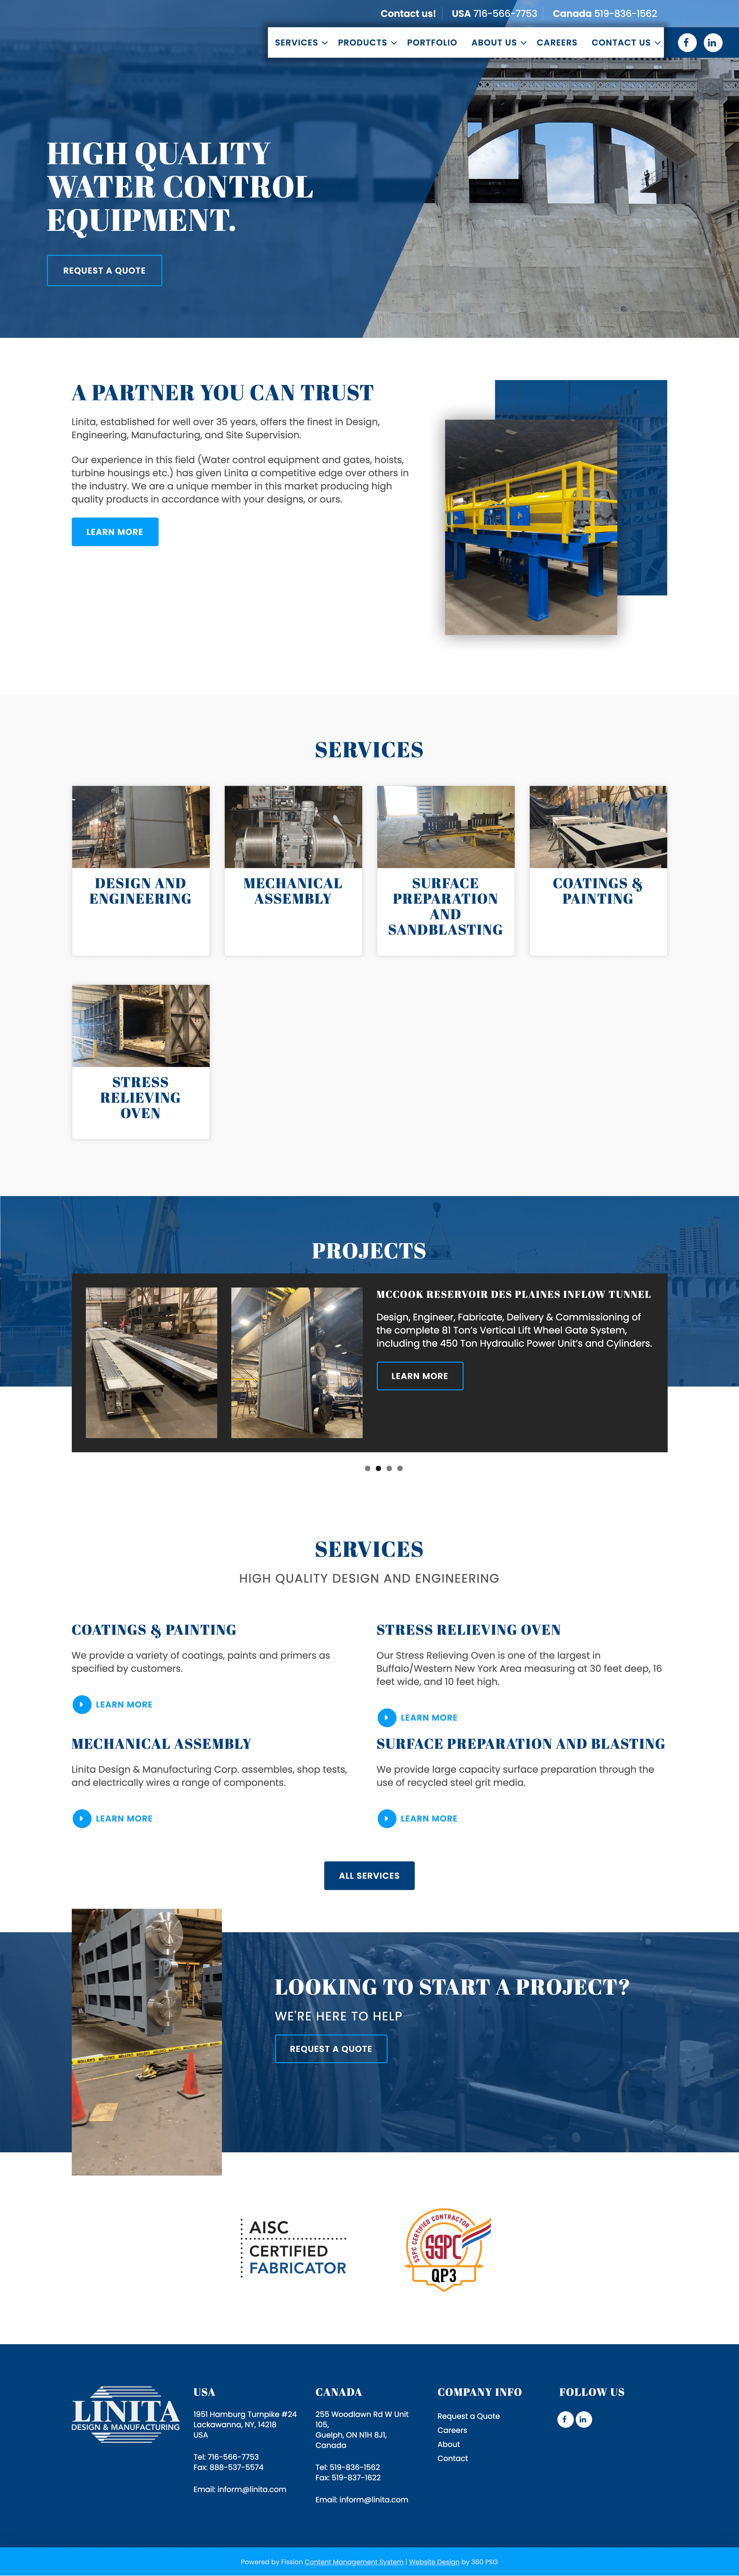 Linita Design & Manufacturing Website - Desktop